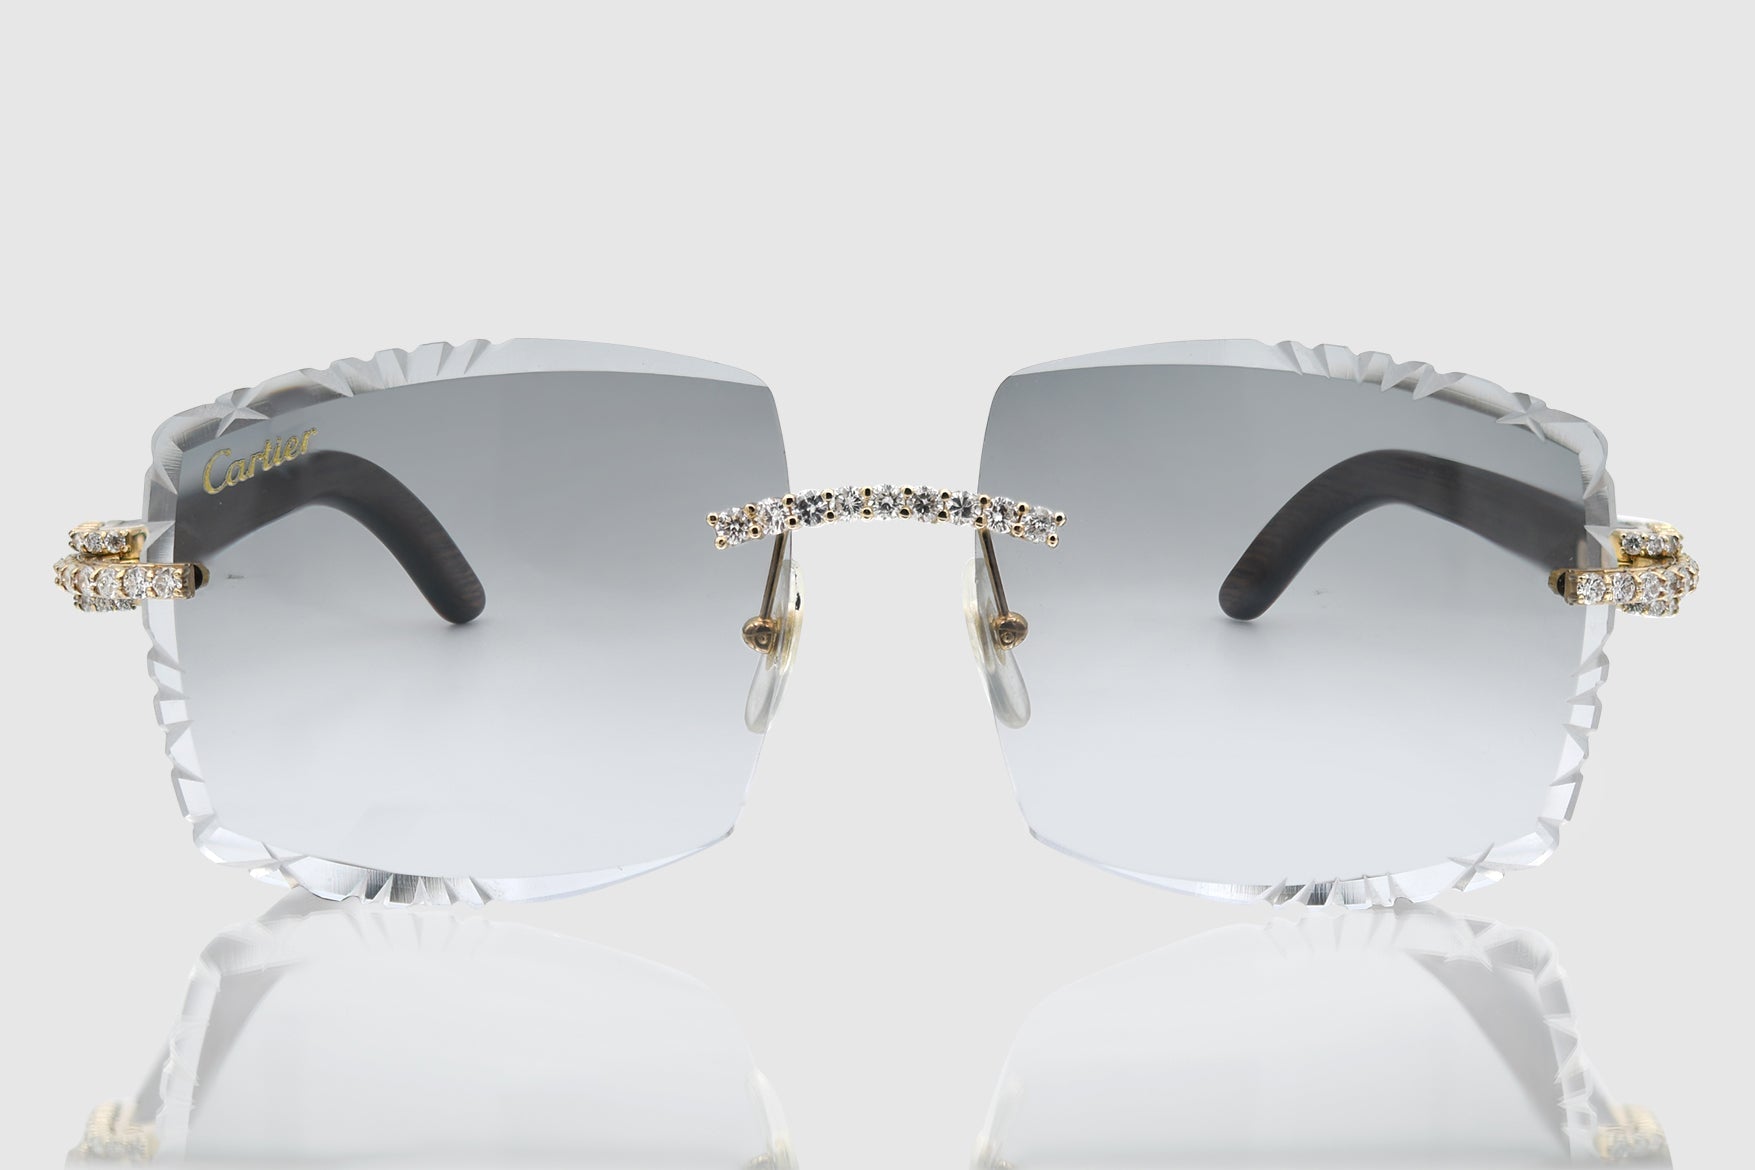 Gray Diamond Cut Sunglasses